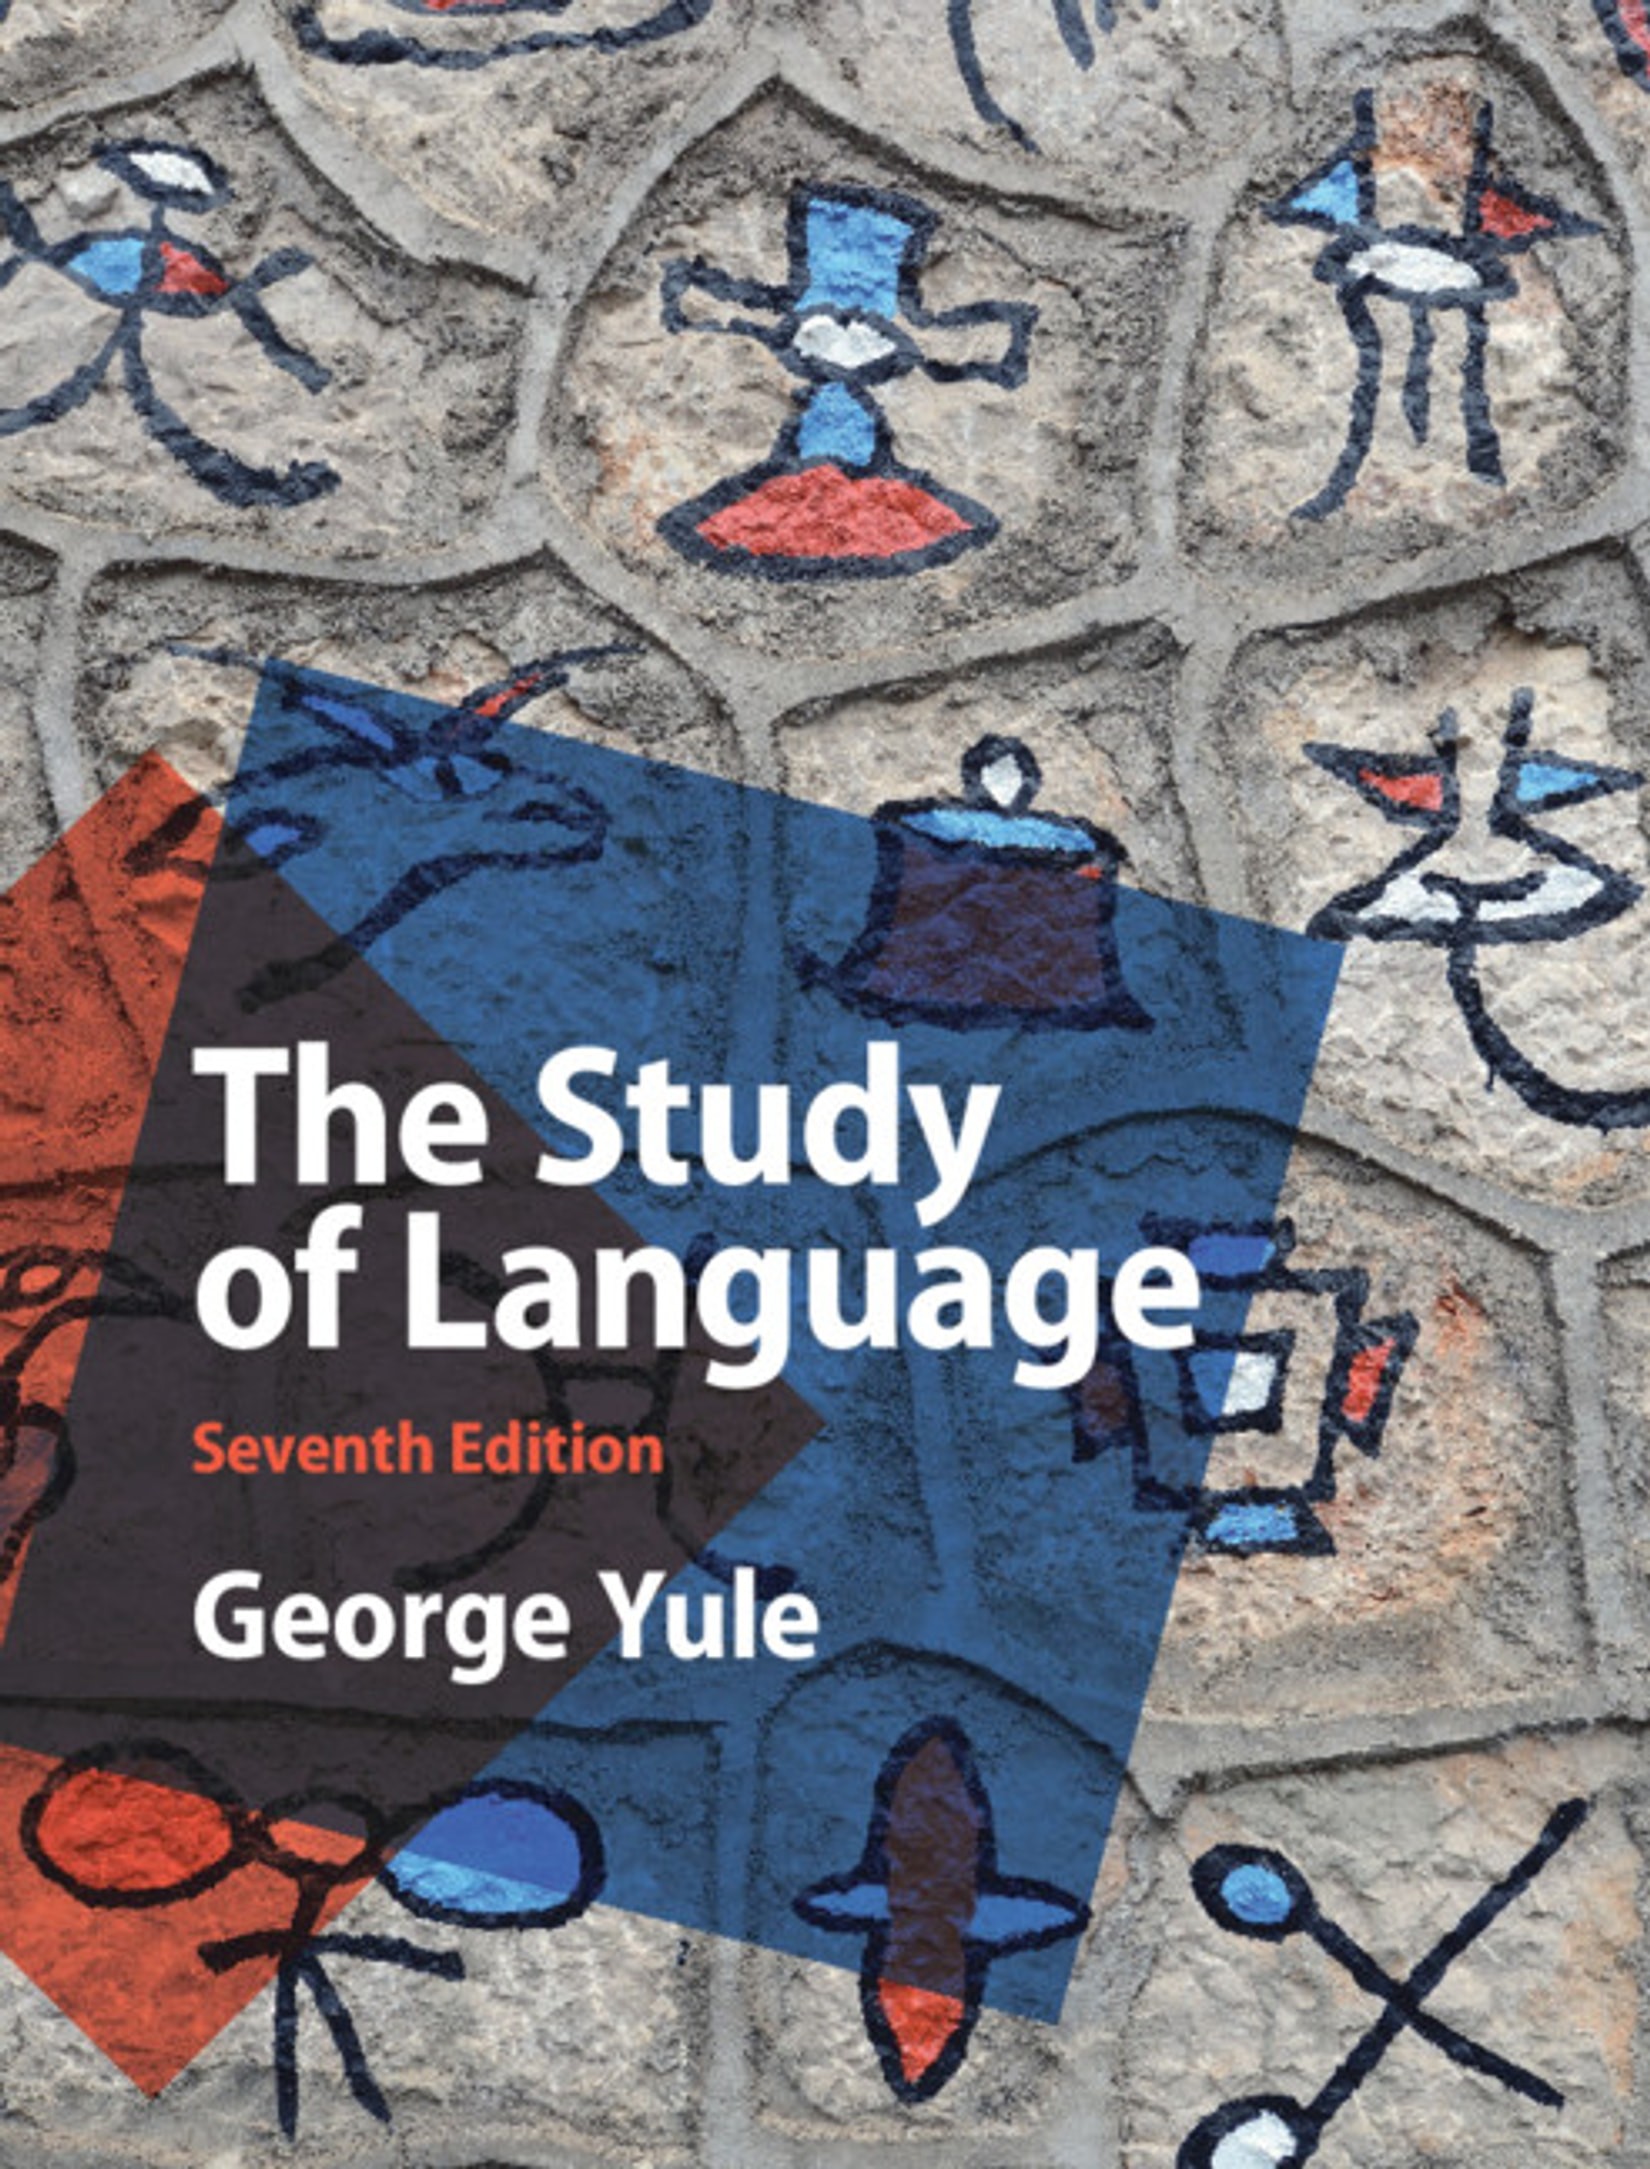 The Study of Language - 7th Edition